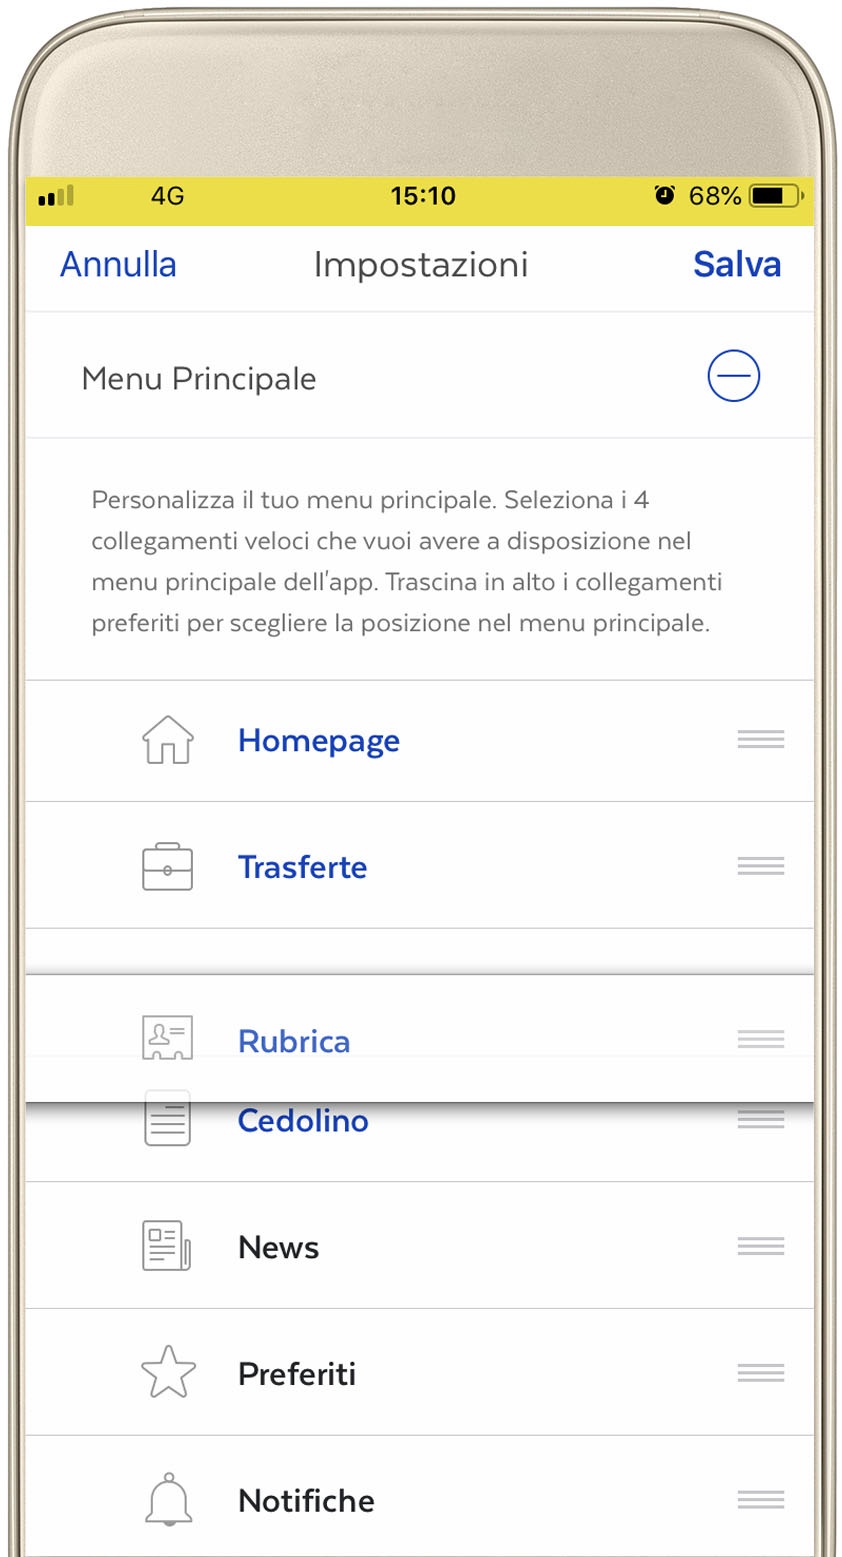 Intranet-App-poste-italiane-NoiDiPoste